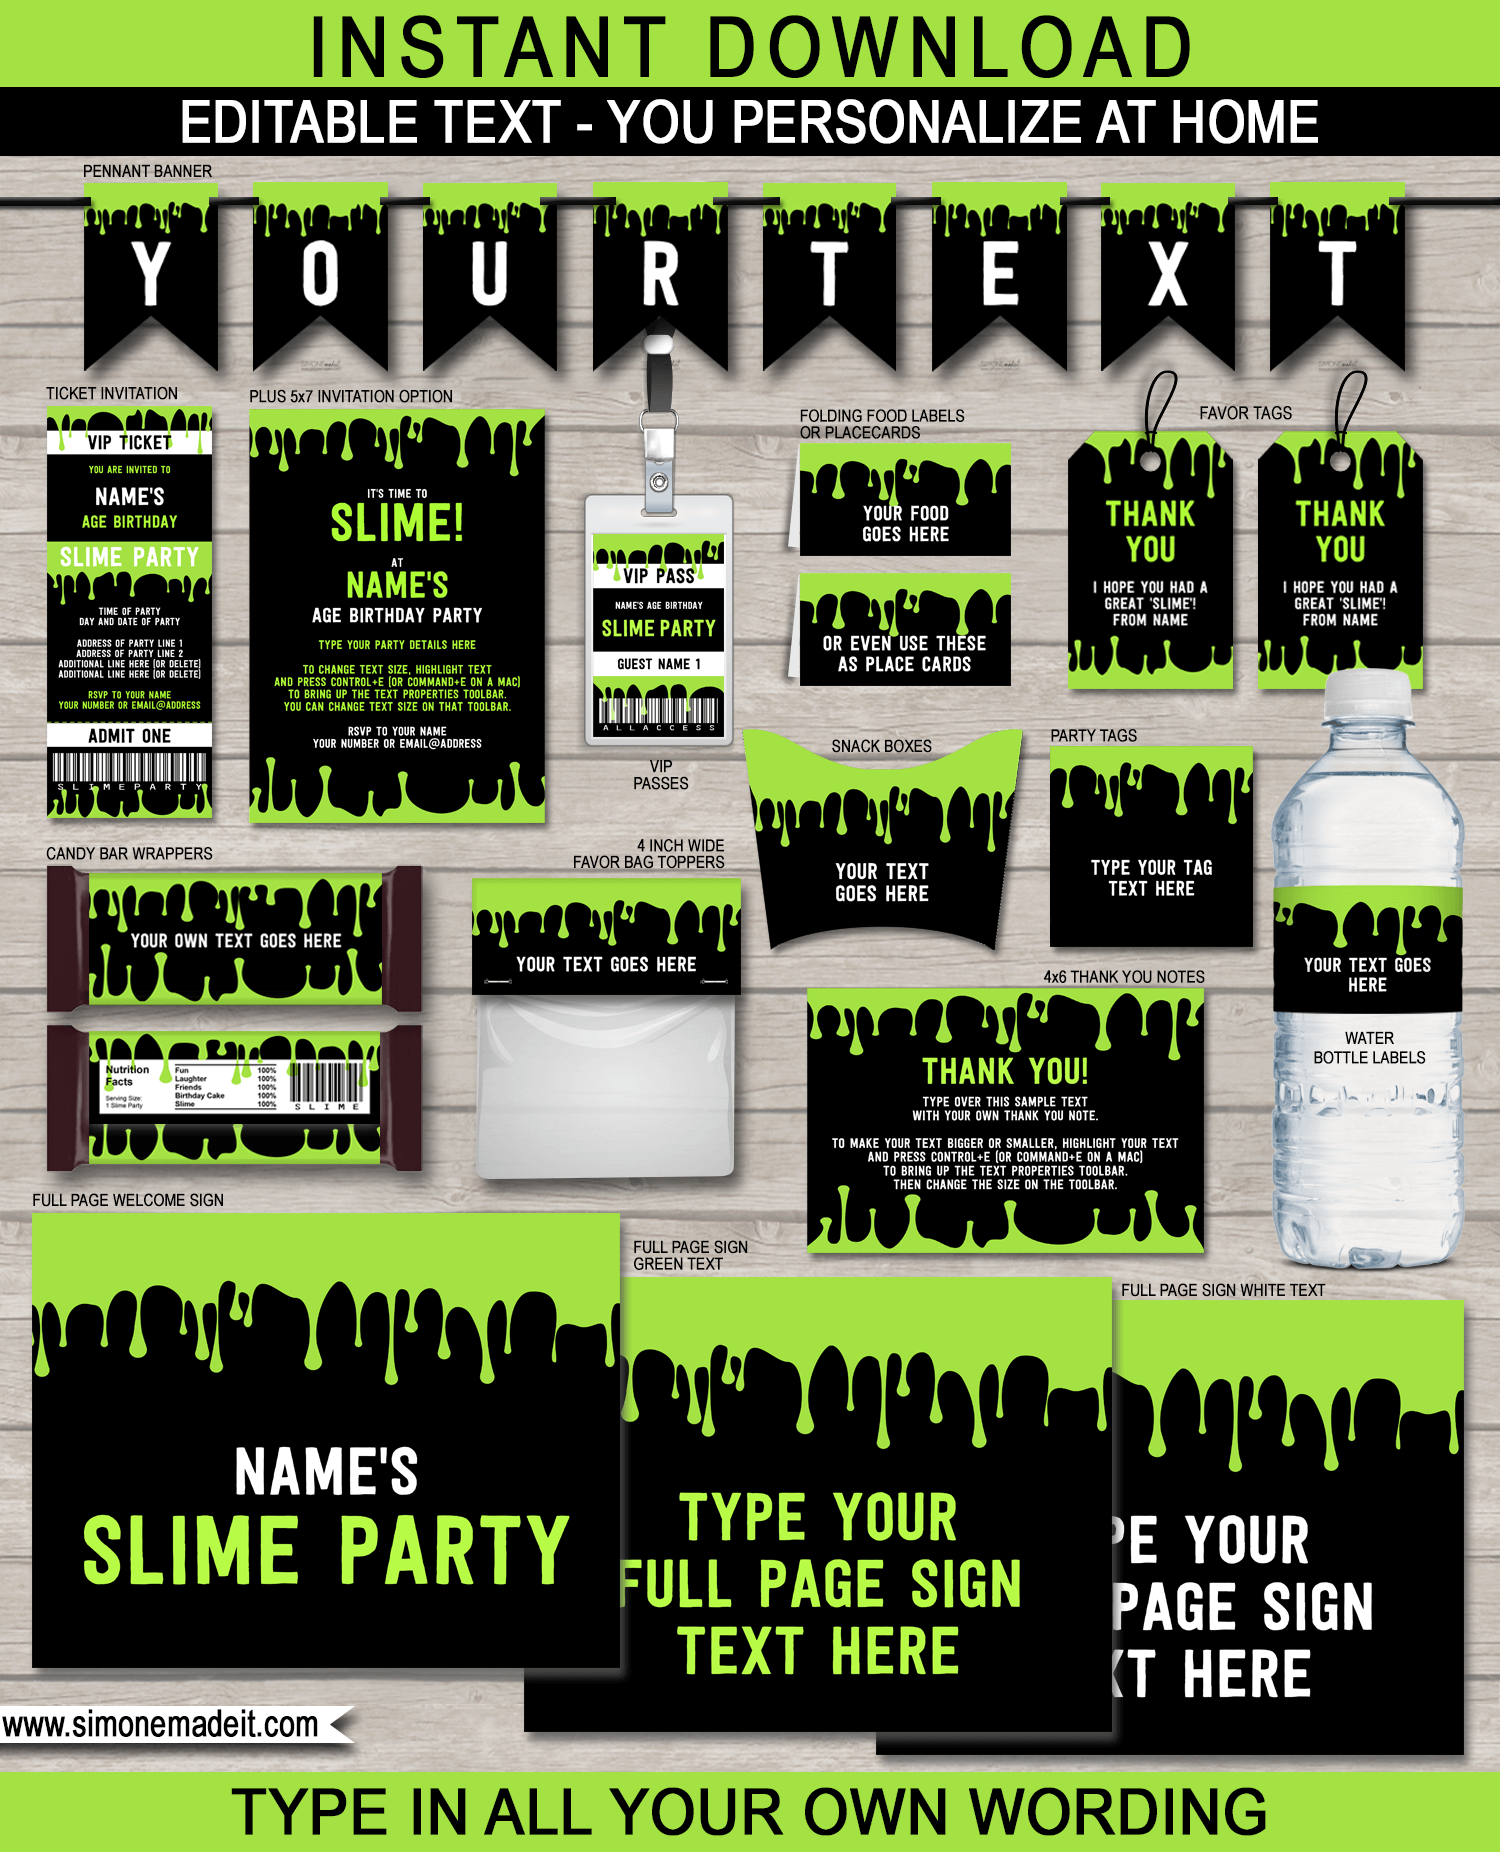 Slime Theme Birthday Party Printables, Invitations & Decorations - Slime Theme Birthday Party - Editable & Printable DIY templates - INSTANT DOWNLOAD via simonemadeit.com